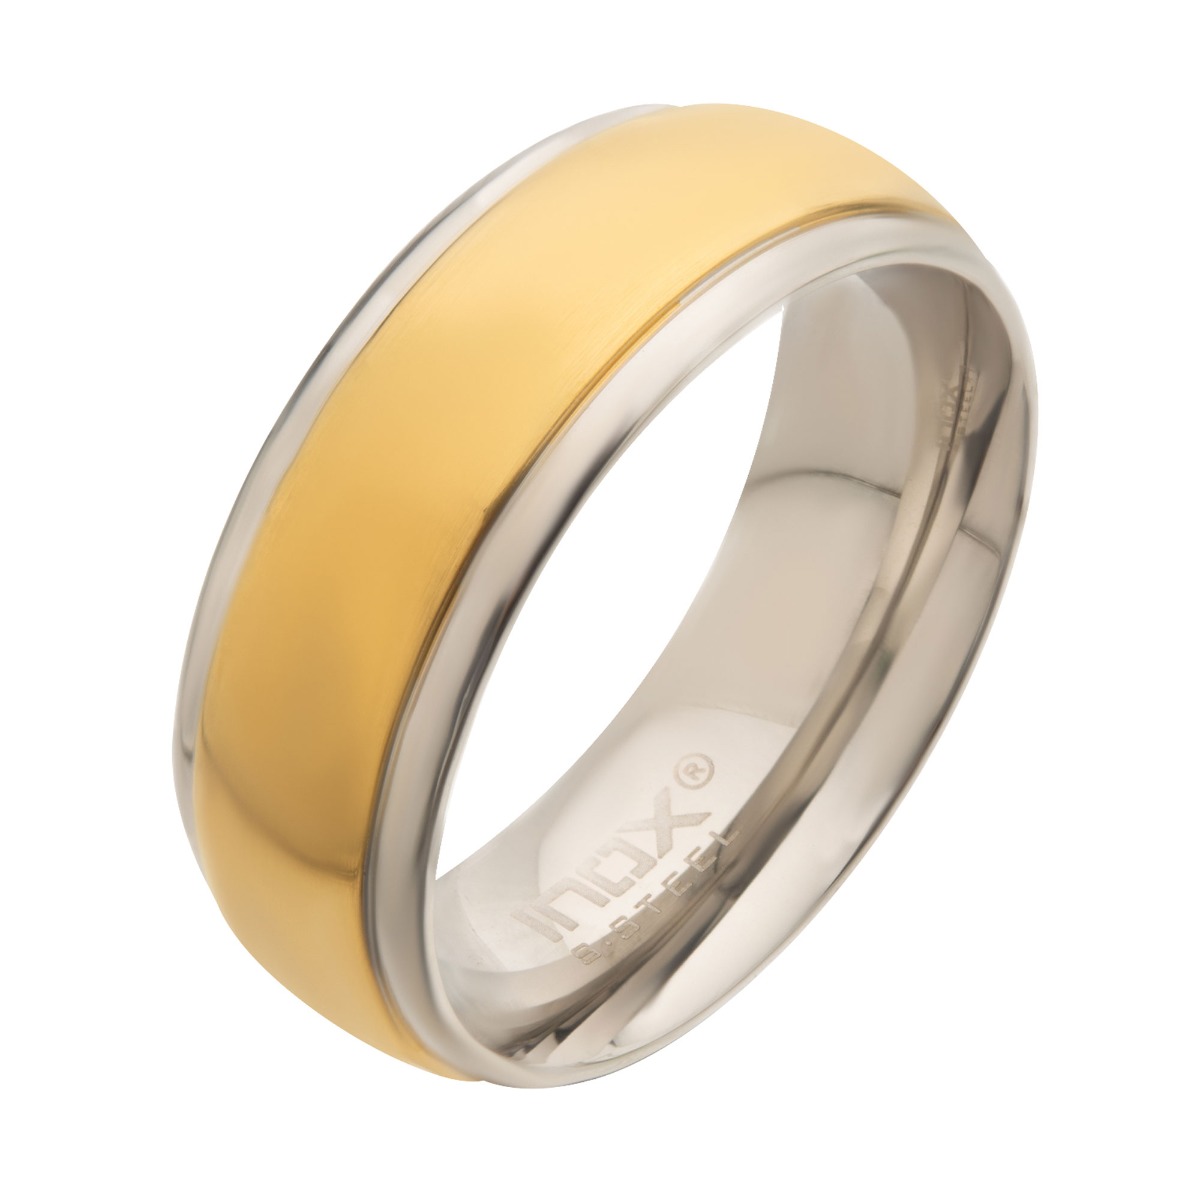 Steel & Gold Plated Patterned Design Ring Carroll / Ochs Jewelers Monroe, MI